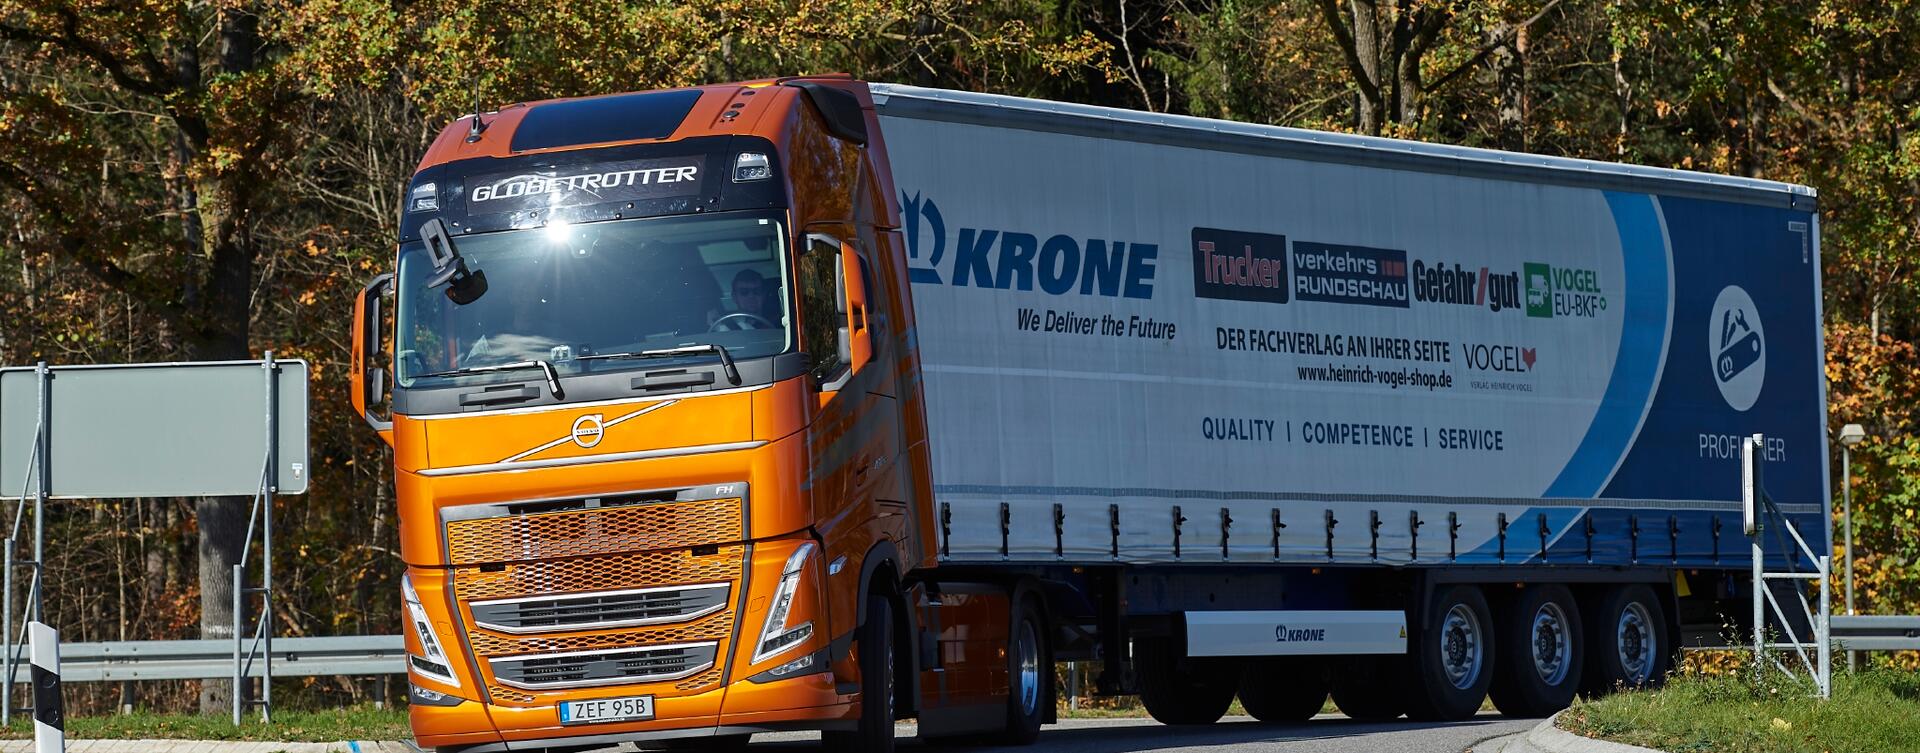 Volvo Trucks vermindert brandstofverbruik met 18% in nieuwe test